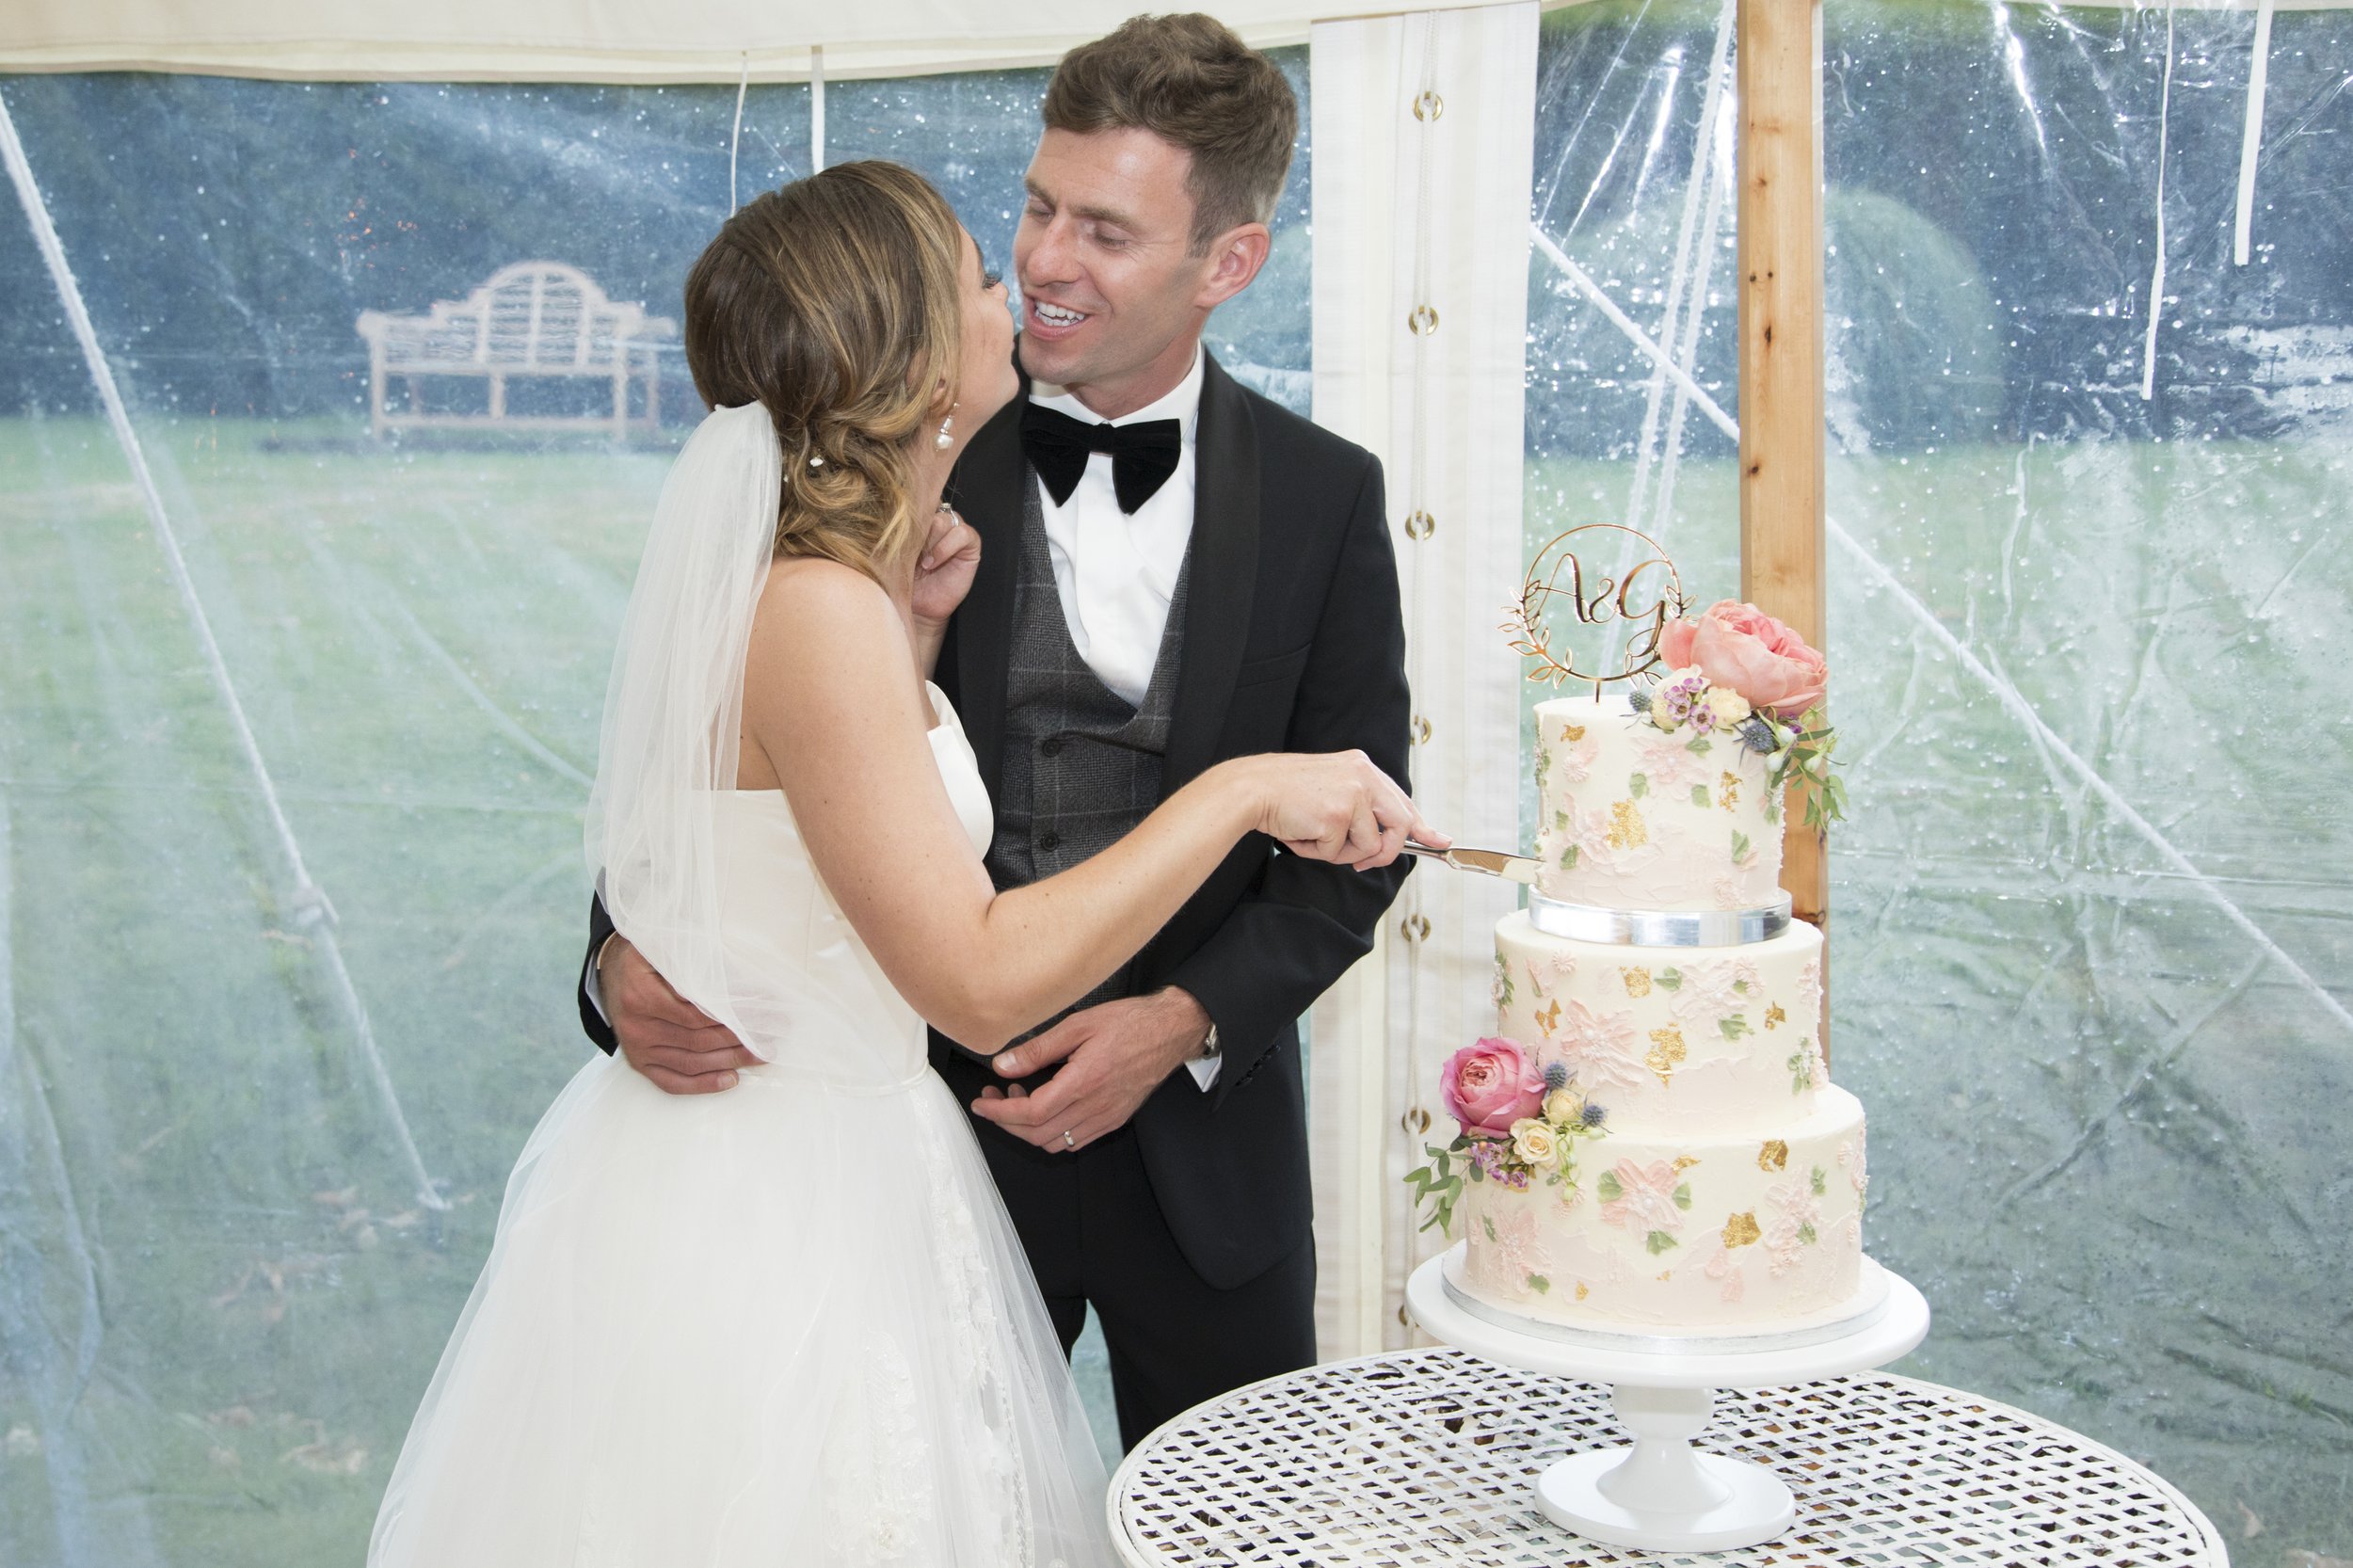  Bride and Groom cutting cake at Goodnestone Park 